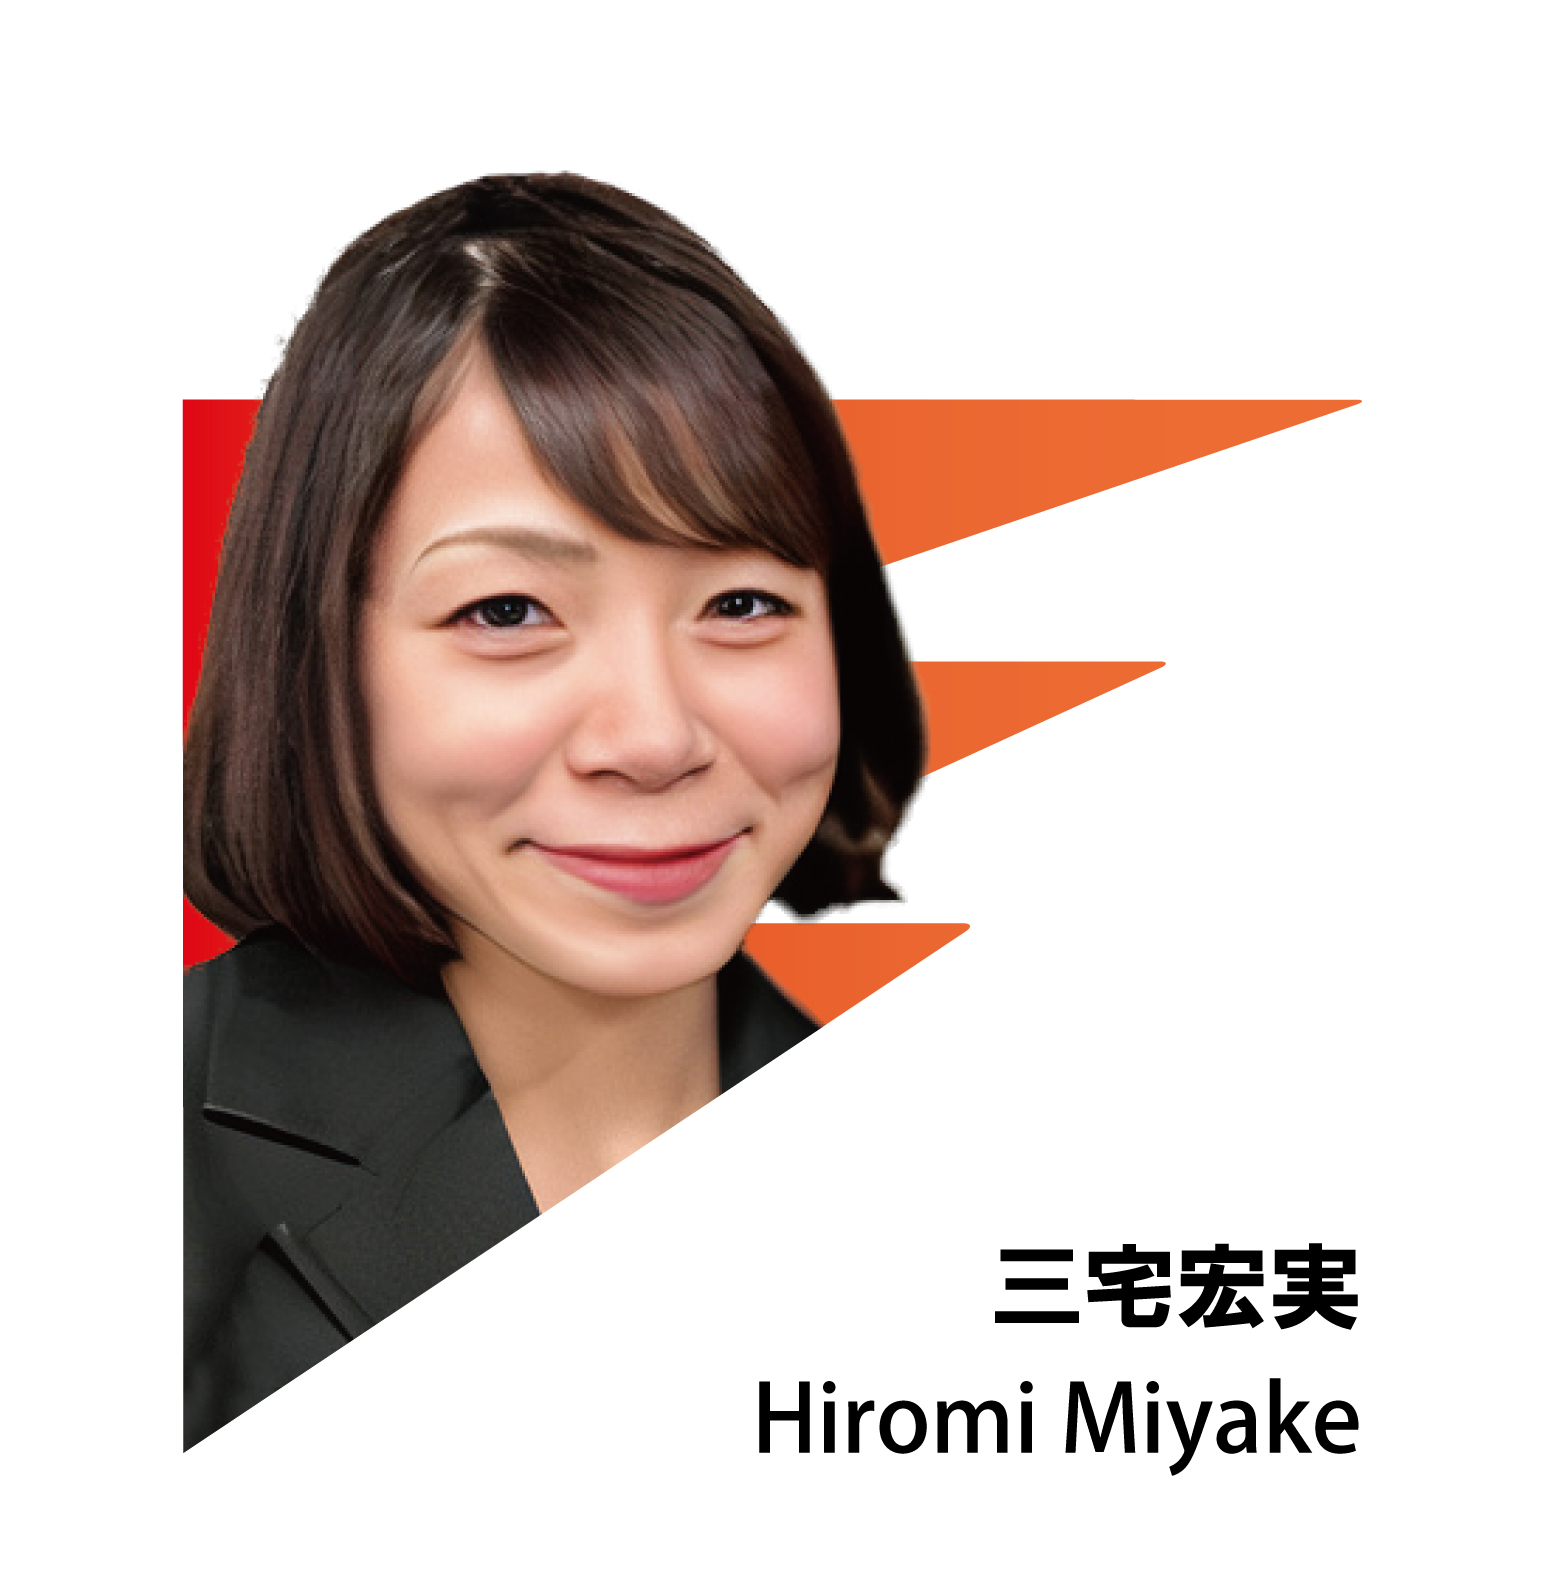 HIROMI MIYAKE